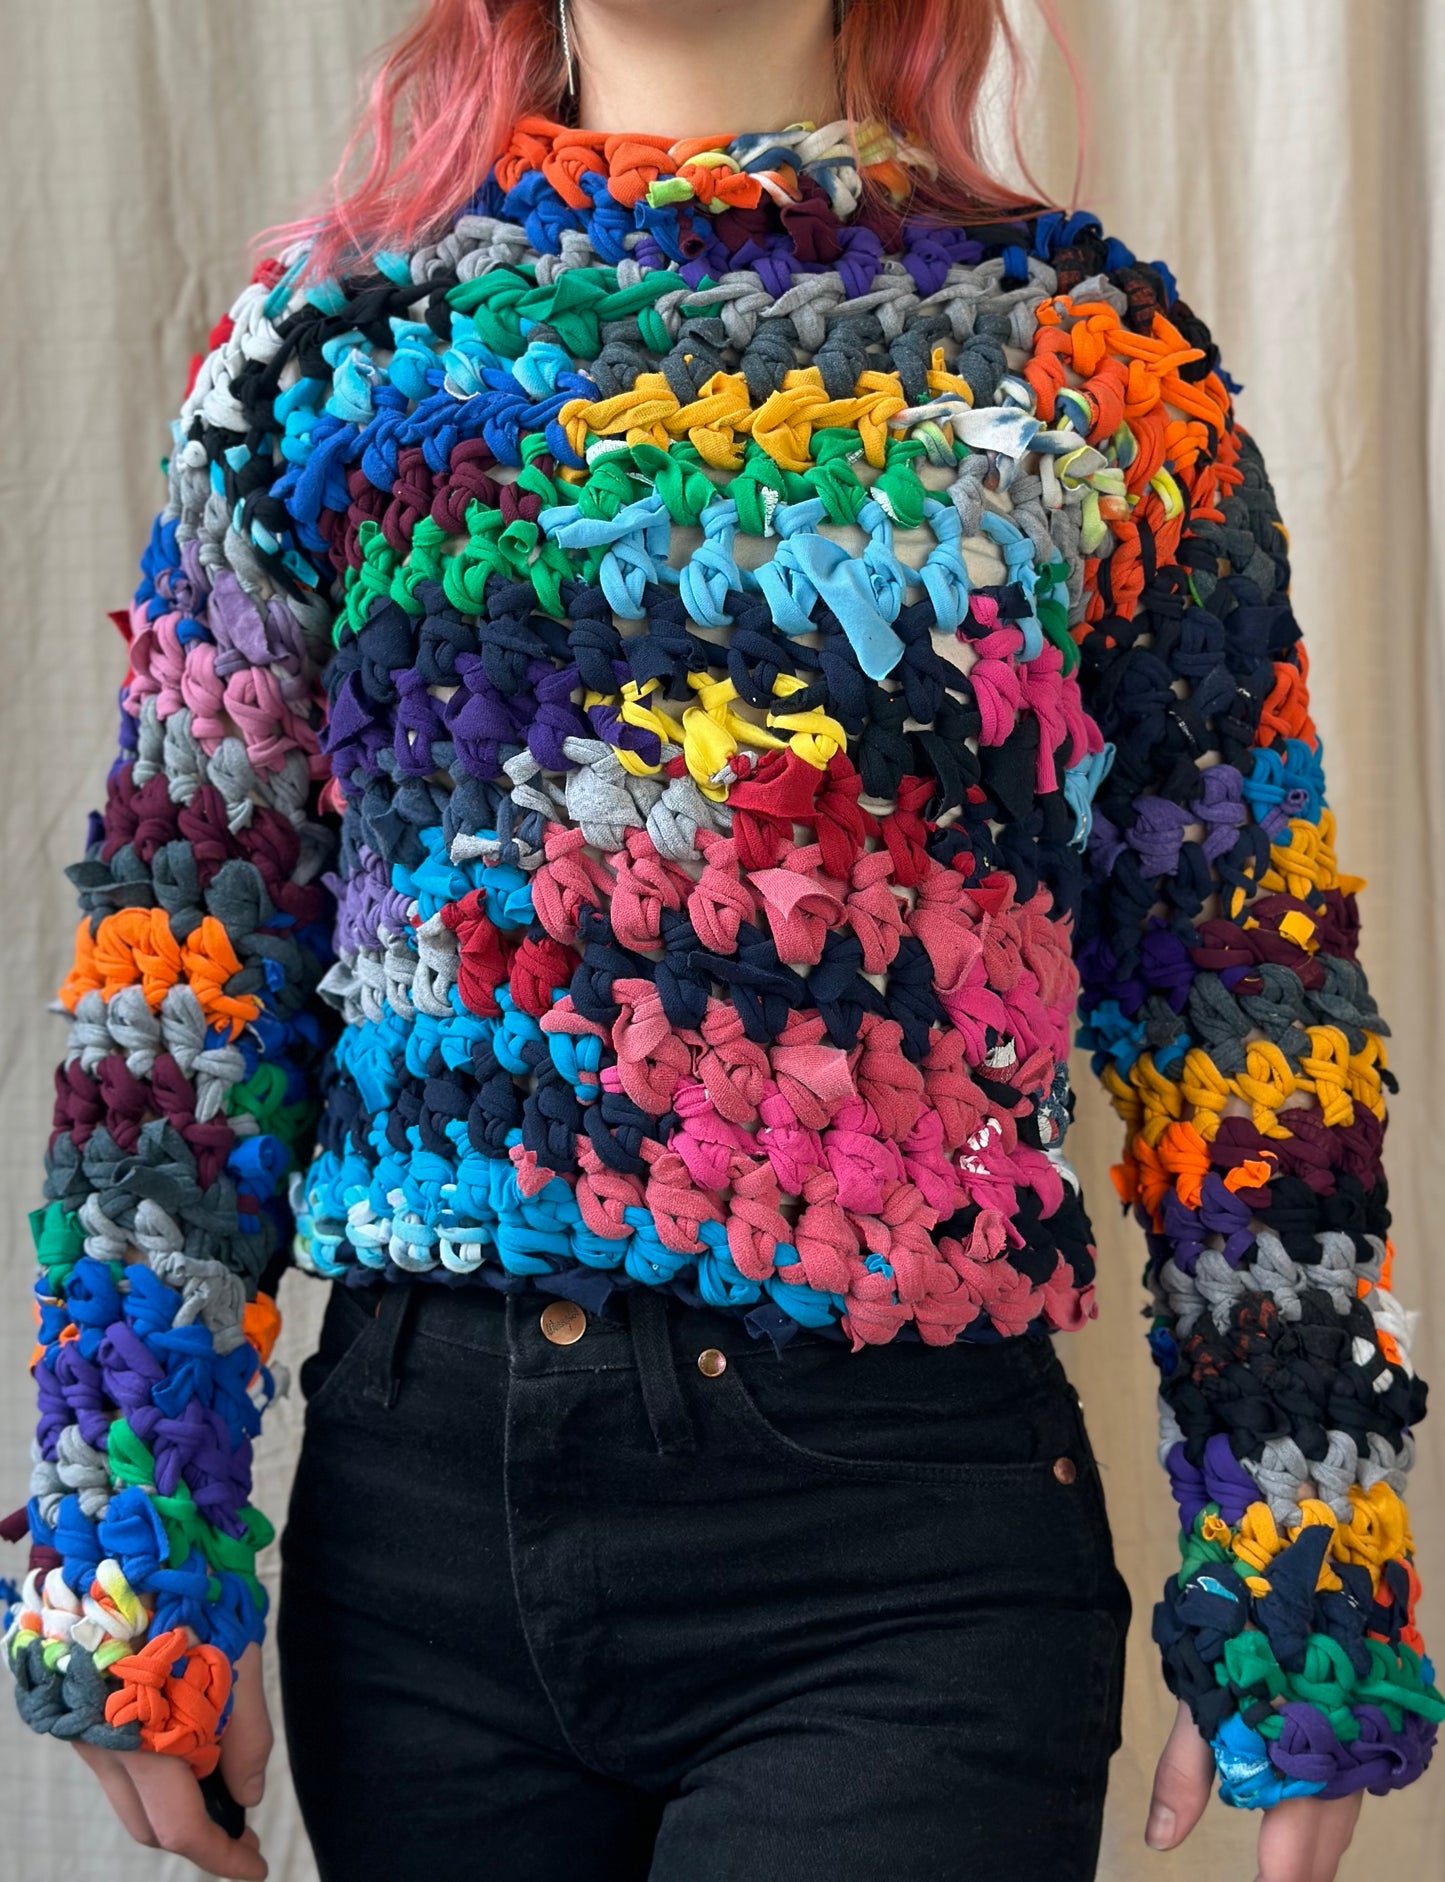 Mixed Legos Crochet Sweater